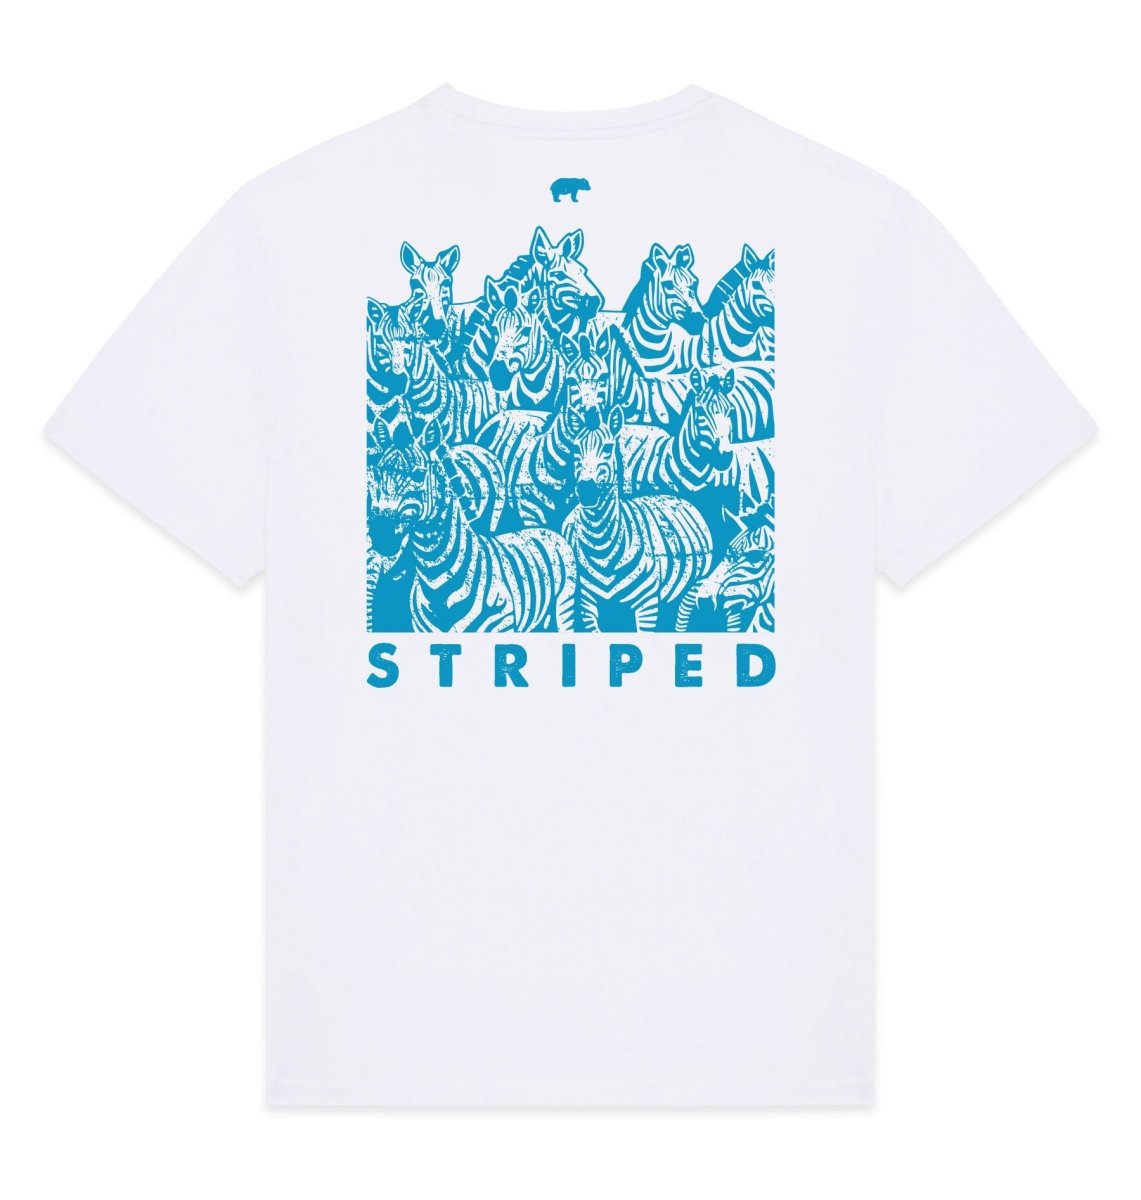 Zebra Graphic Womens T-shirt - Blue Panda